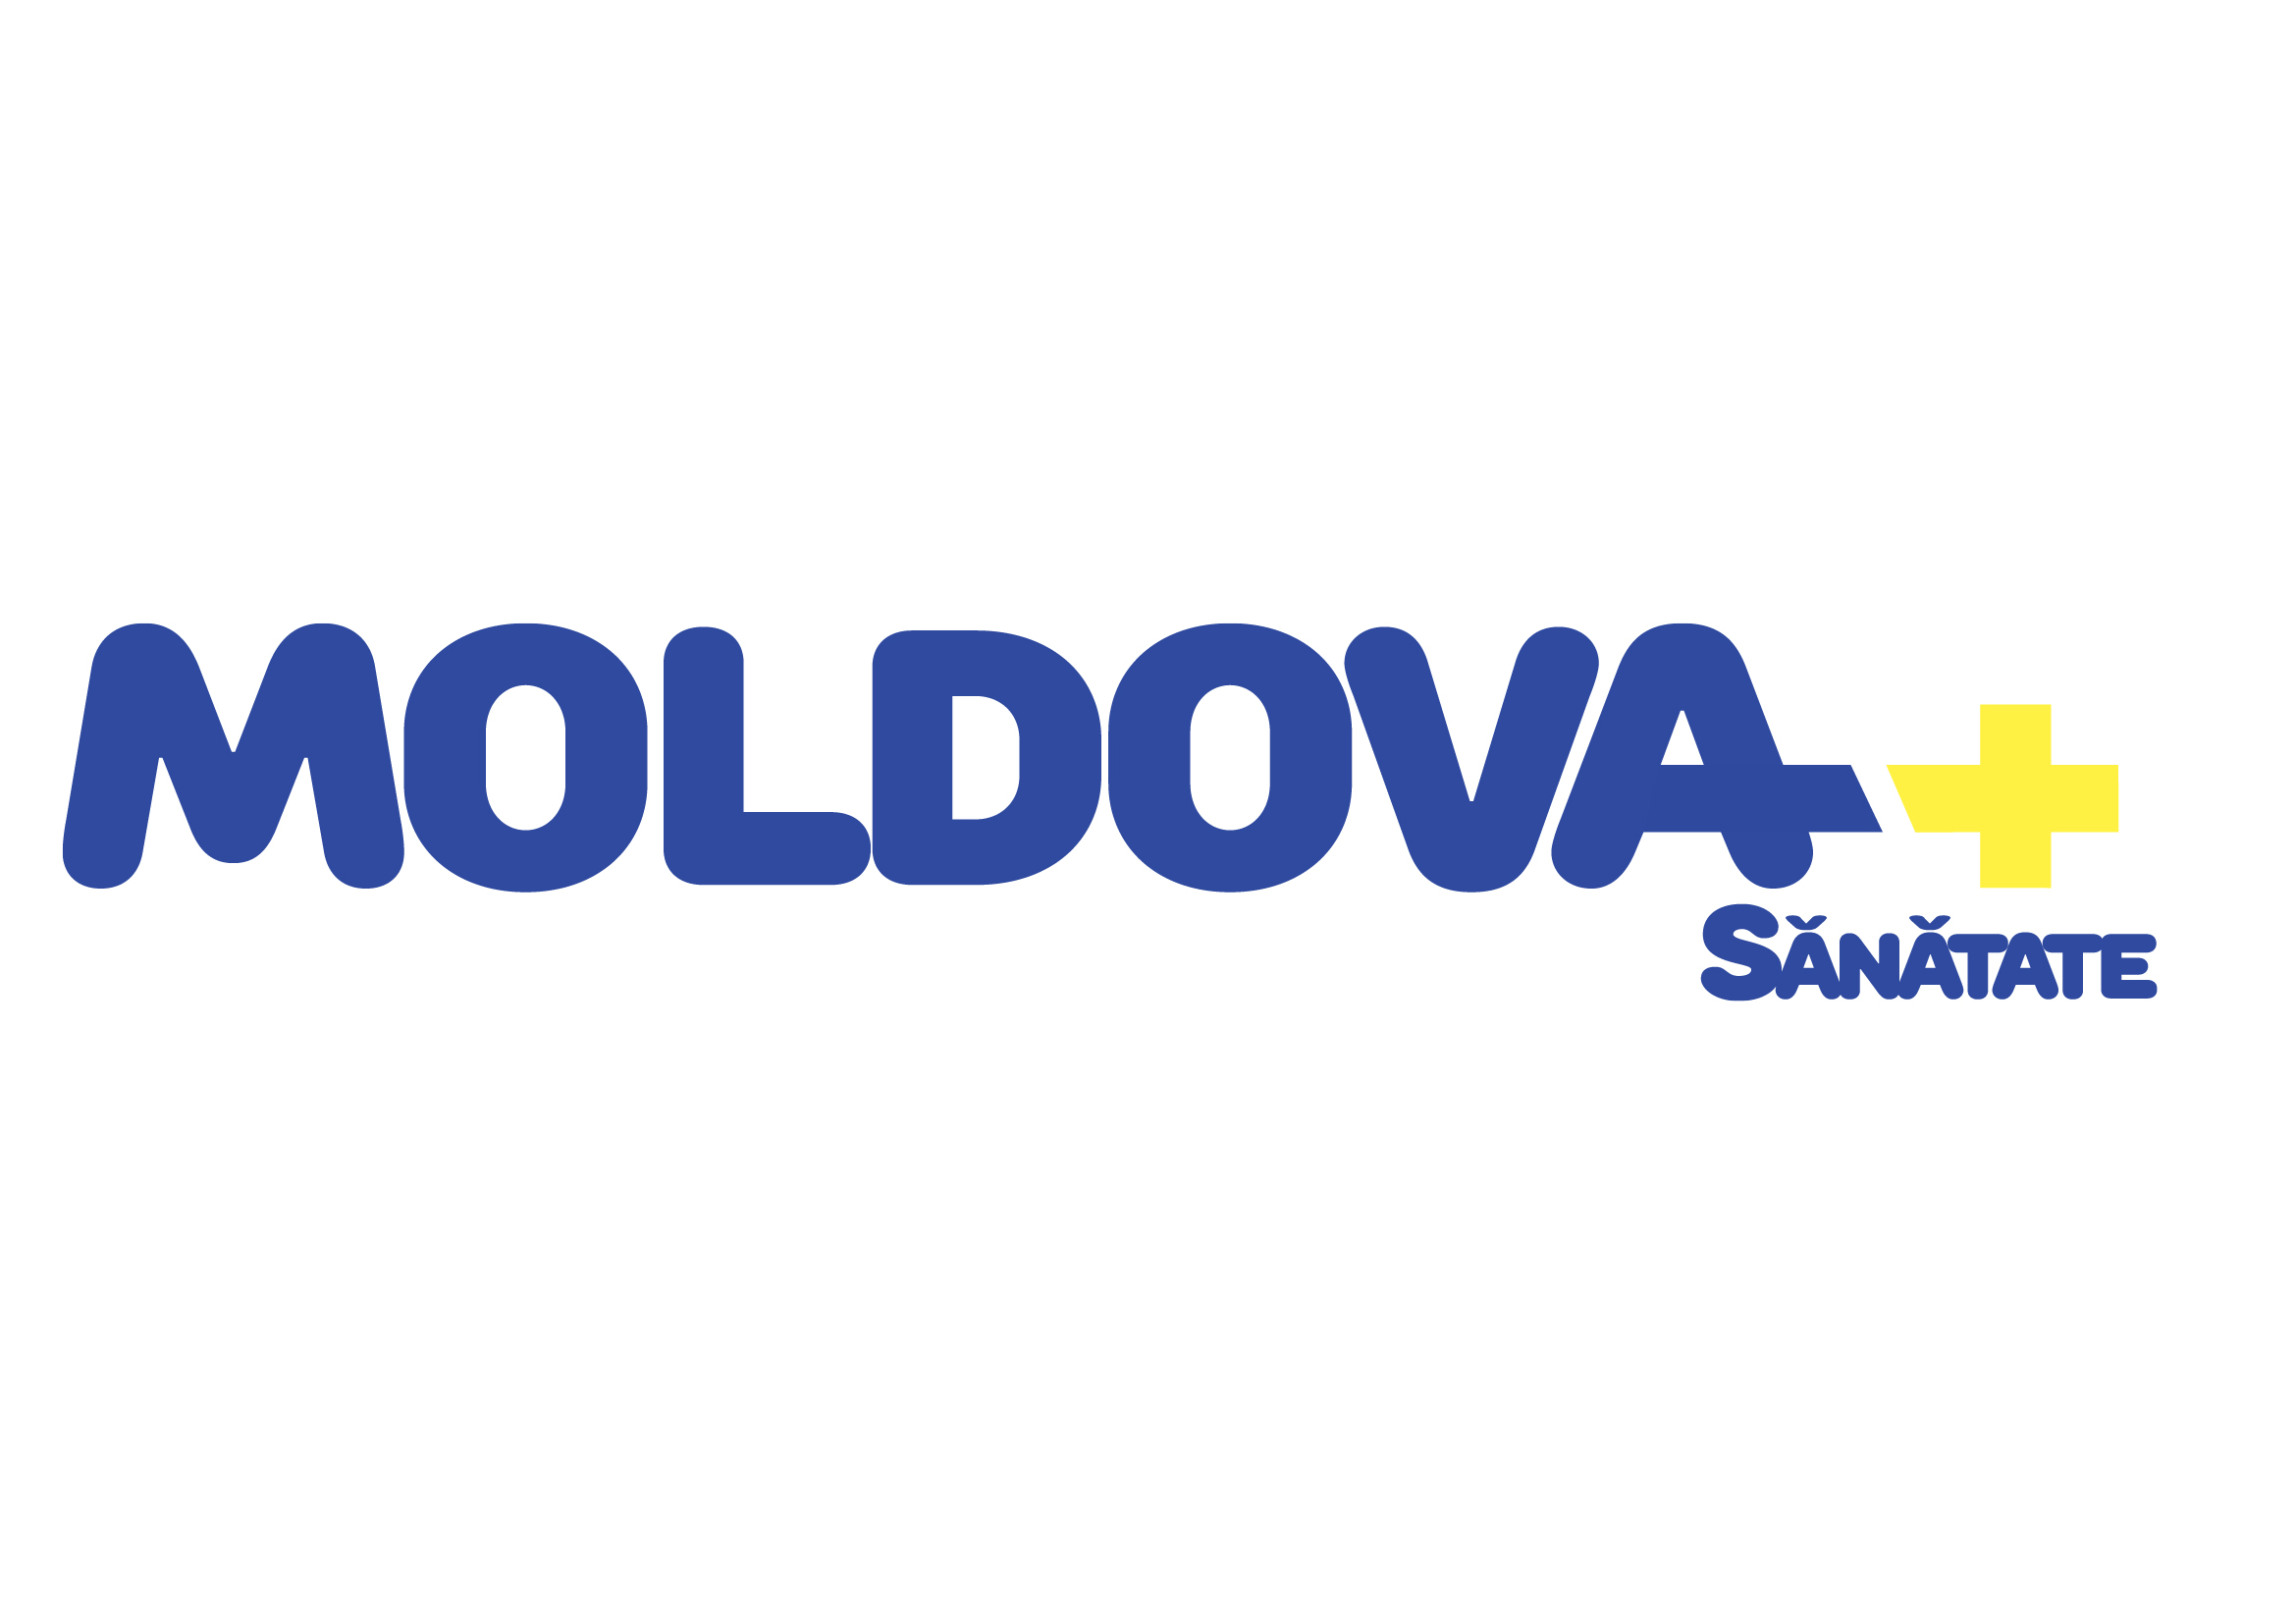 Moldova plus sanatate logo